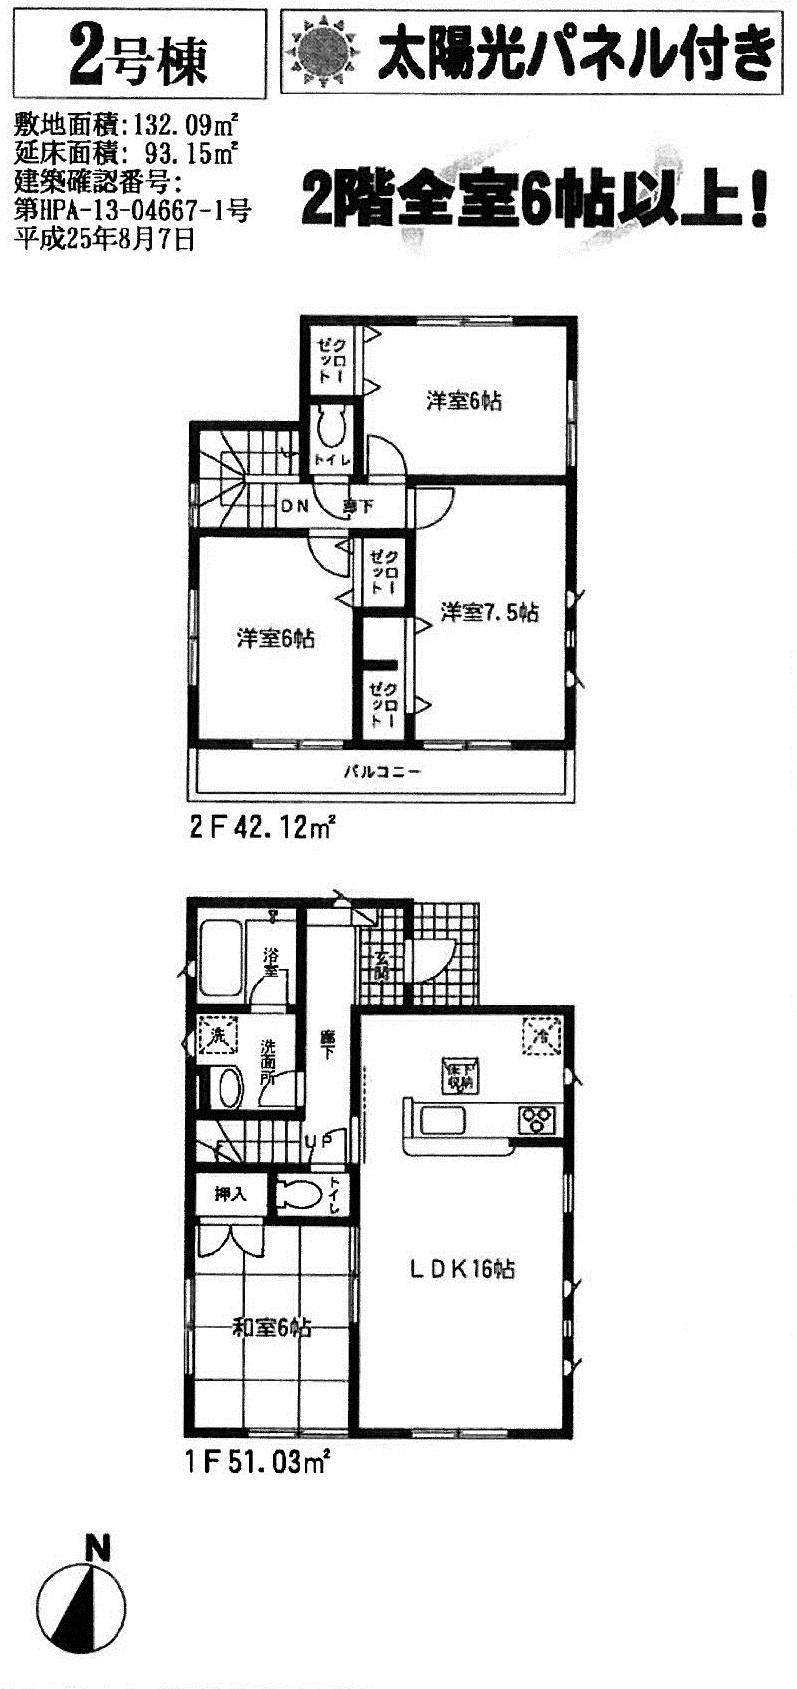 Floor plan. (Building 2), Price 21,800,000 yen, 4LDK, Land area 132.09 sq m , Building area 93.15 sq m